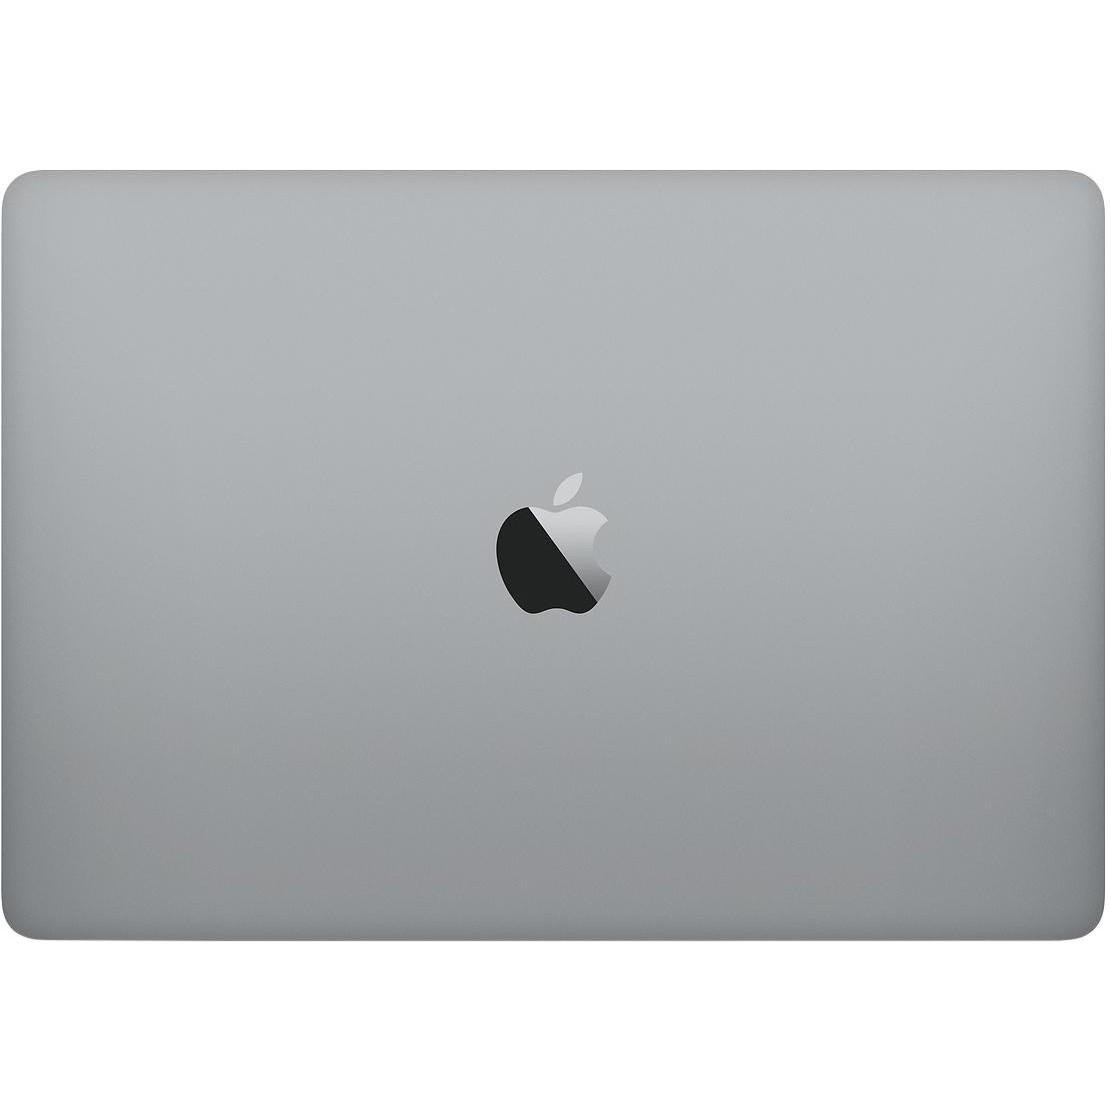 Apple MacBook Pro 13 Touch Bar (MV972) 512Gb Space Gray б/у